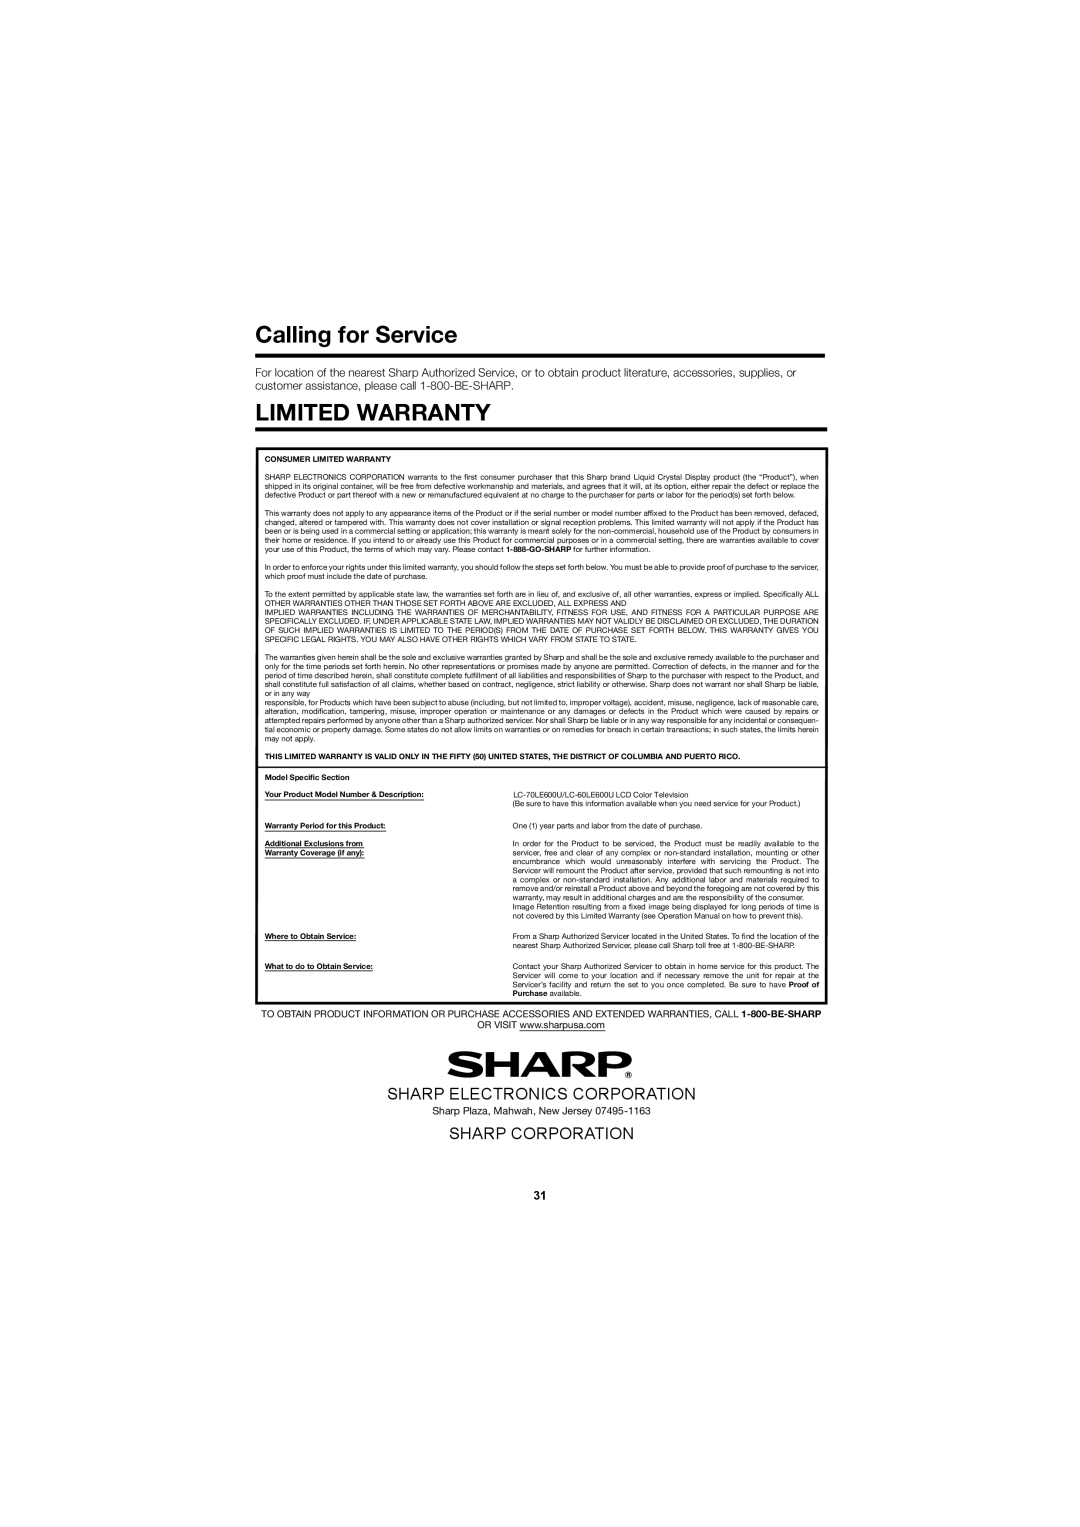 Sharp LC-60LE600U, LC-70LE600U Calling for Service, Limited Warranty, Sharp Electronics Corporation, Sharp Corporation 